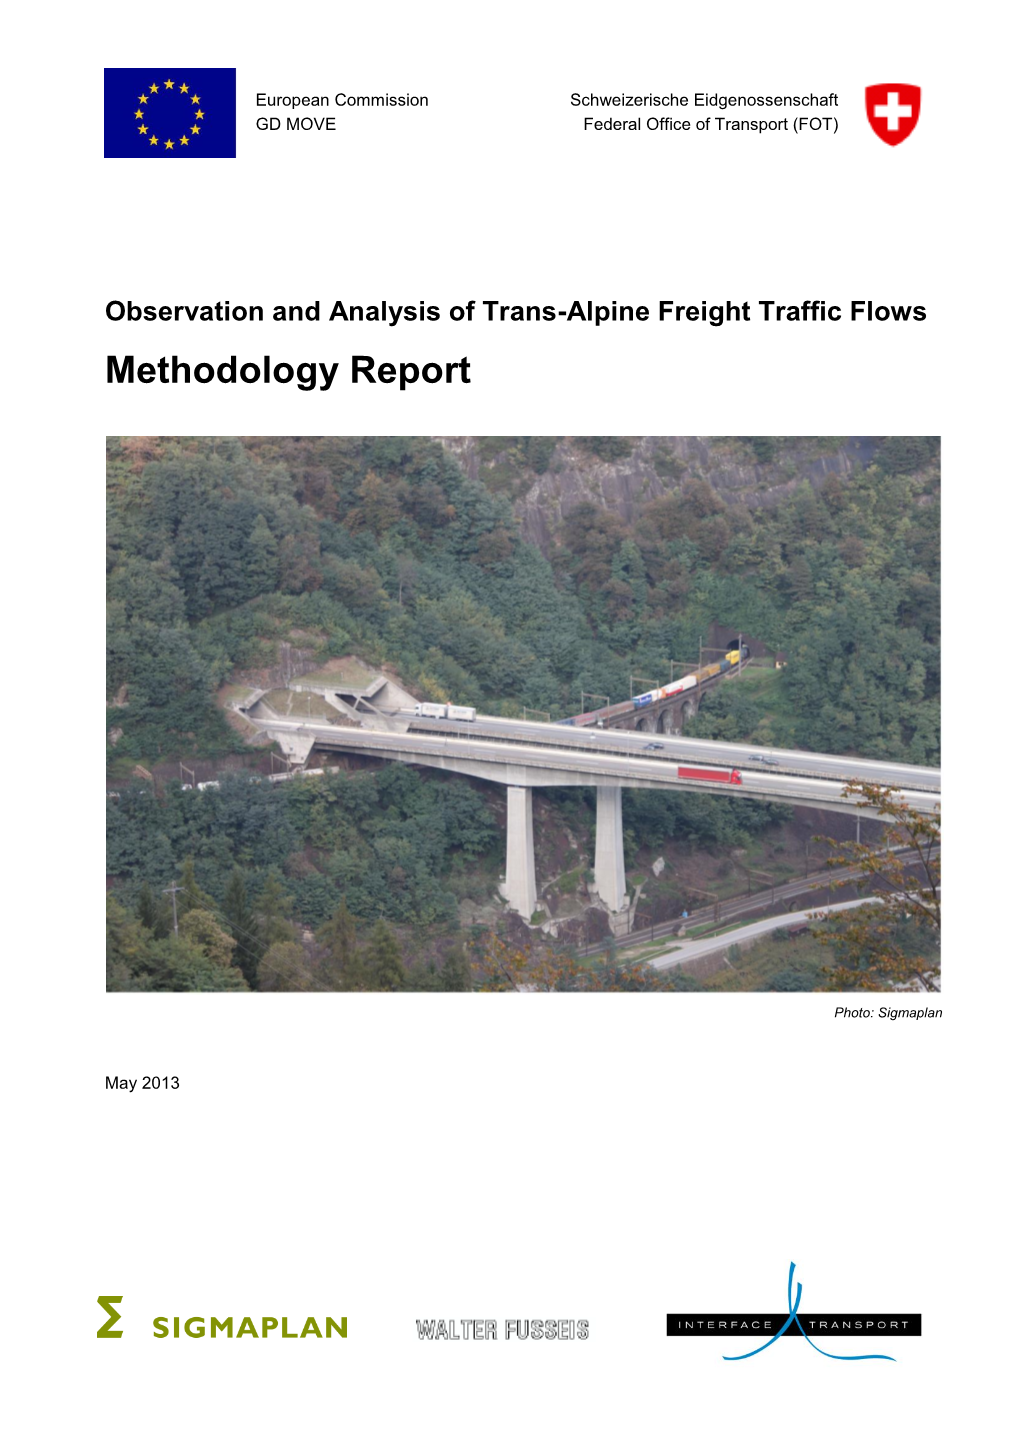 Methodology Report